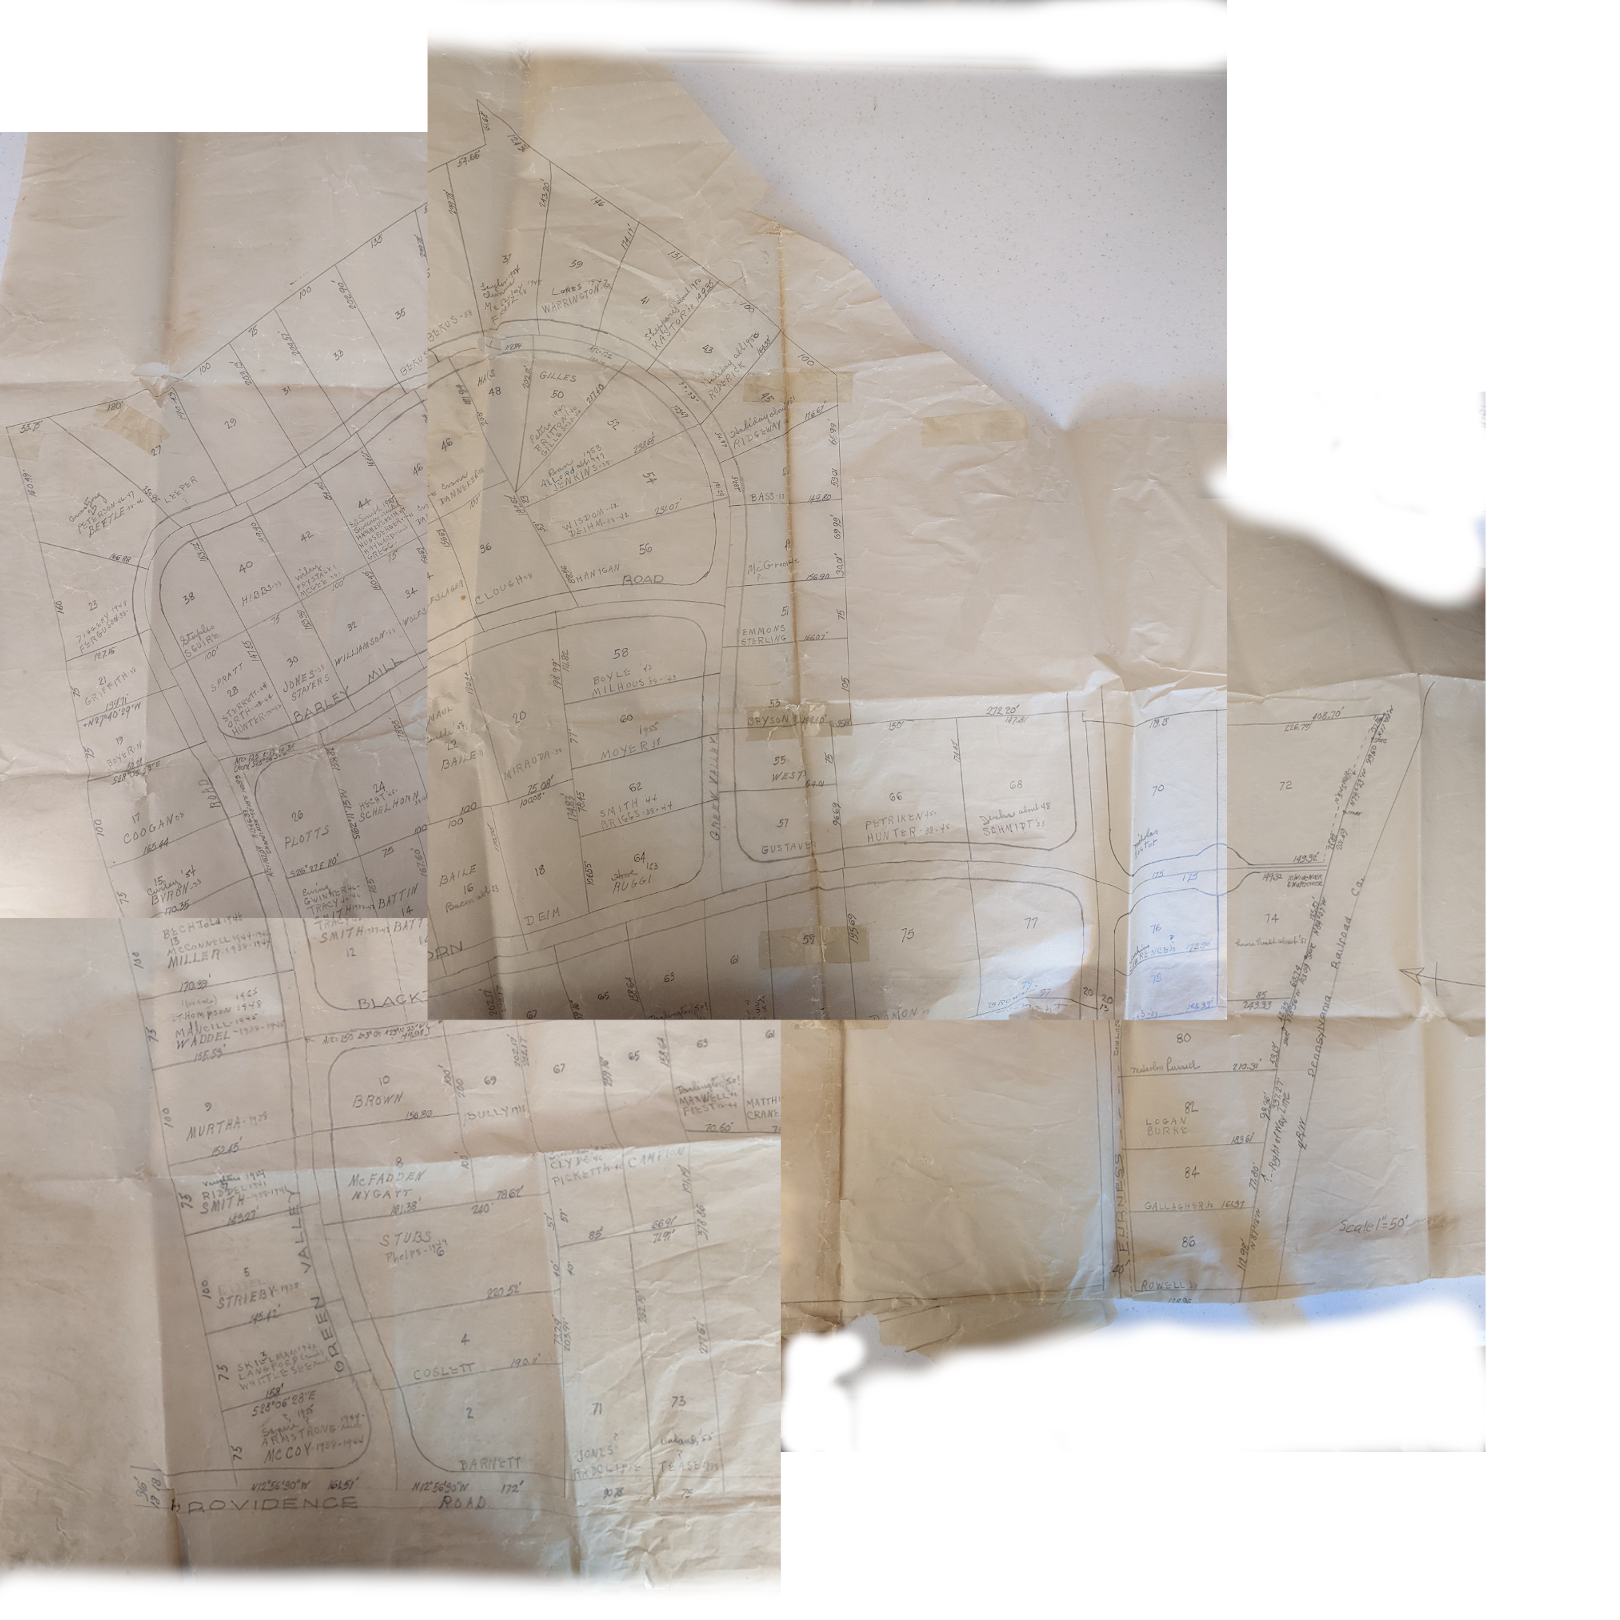 Arthur E. Plotts's hand-drawn survey map of Heatherwold